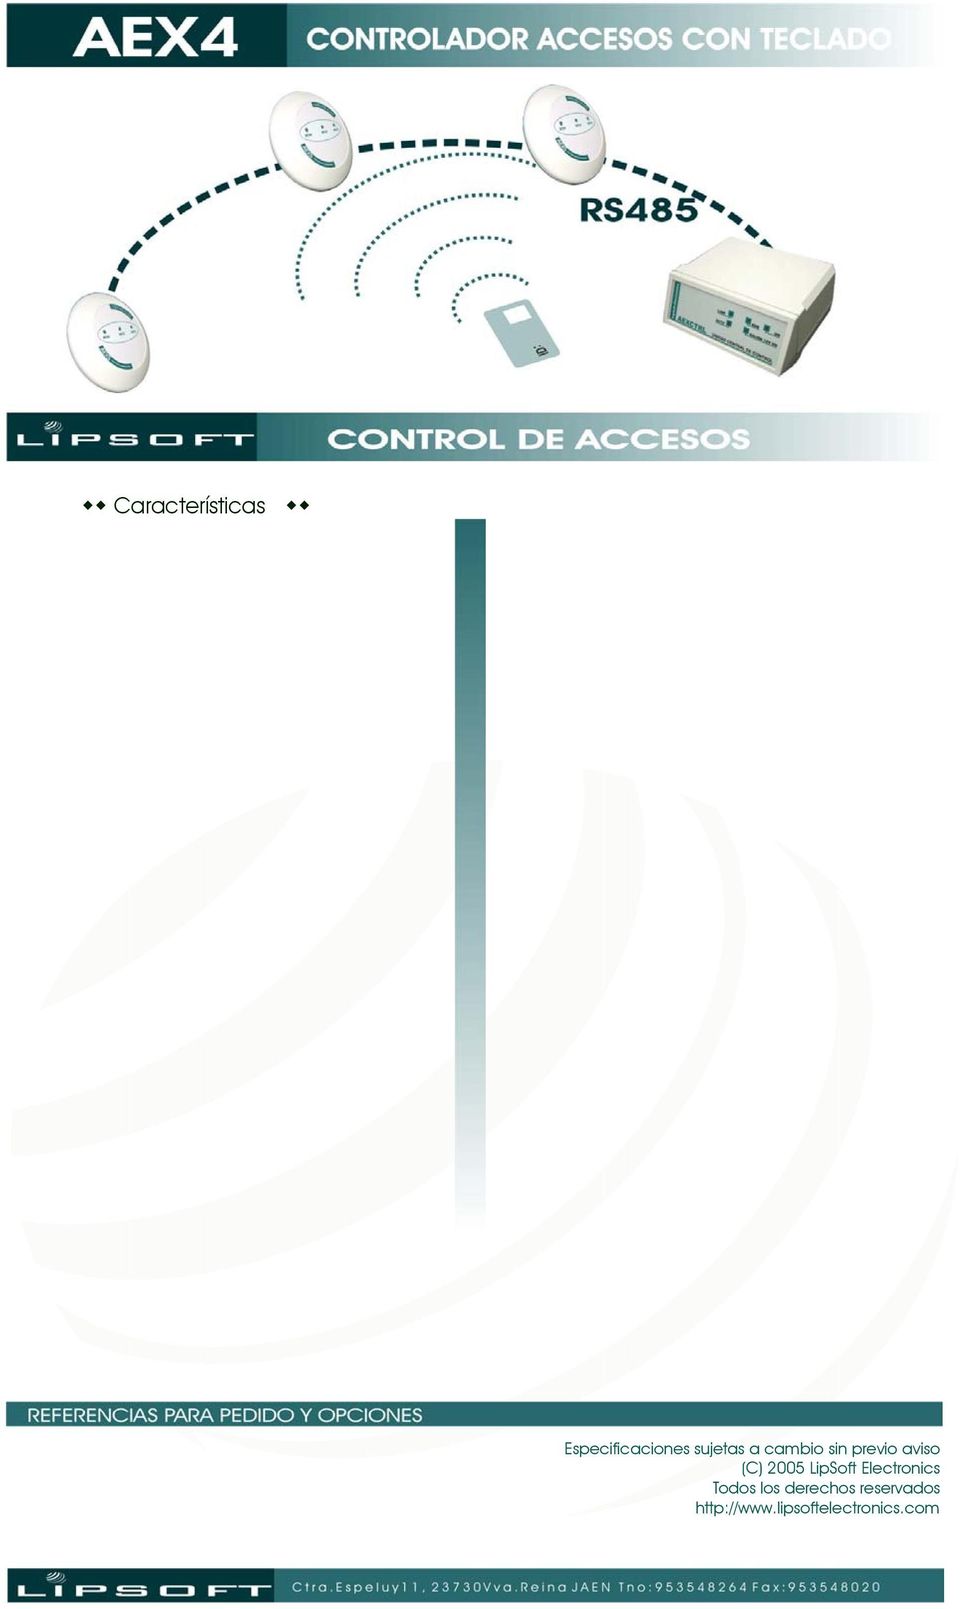 <Zumbador interno para validar operación < Tamper antivandálico para detección de tapa abierta <4 modos de limitación accesos configurables.